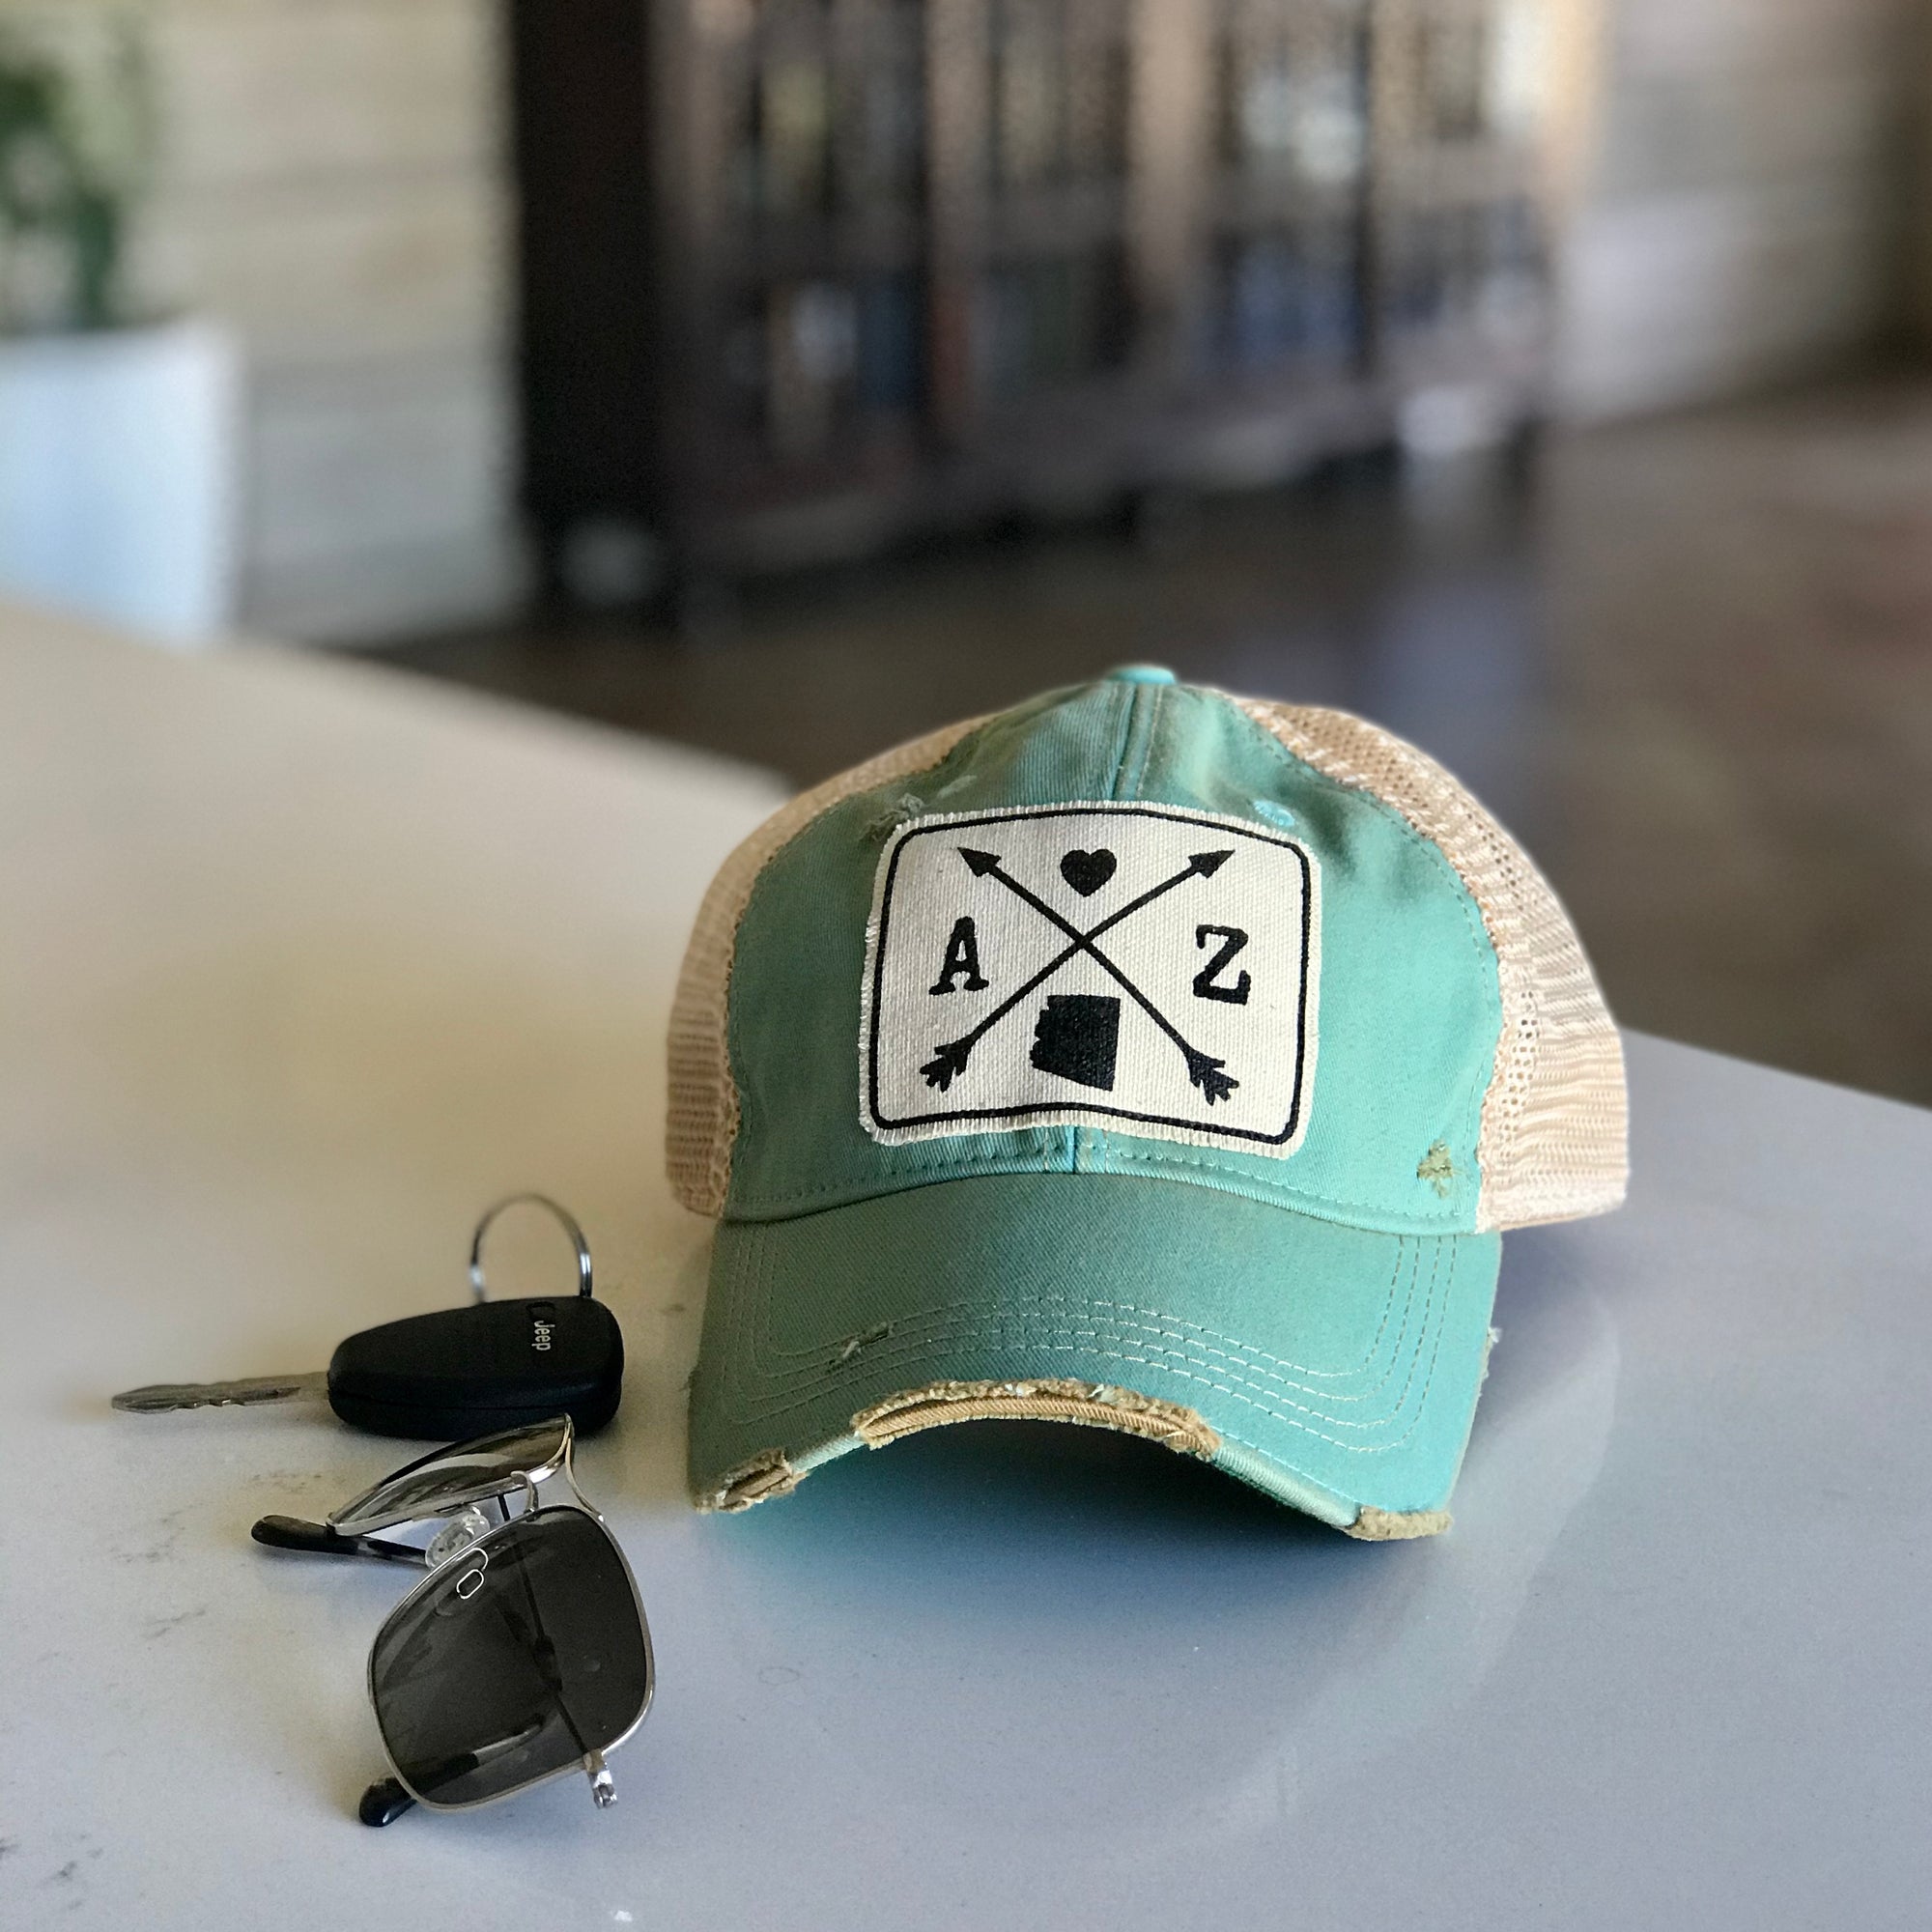 Arizona state vintage style distressed trucker hat cap aqua